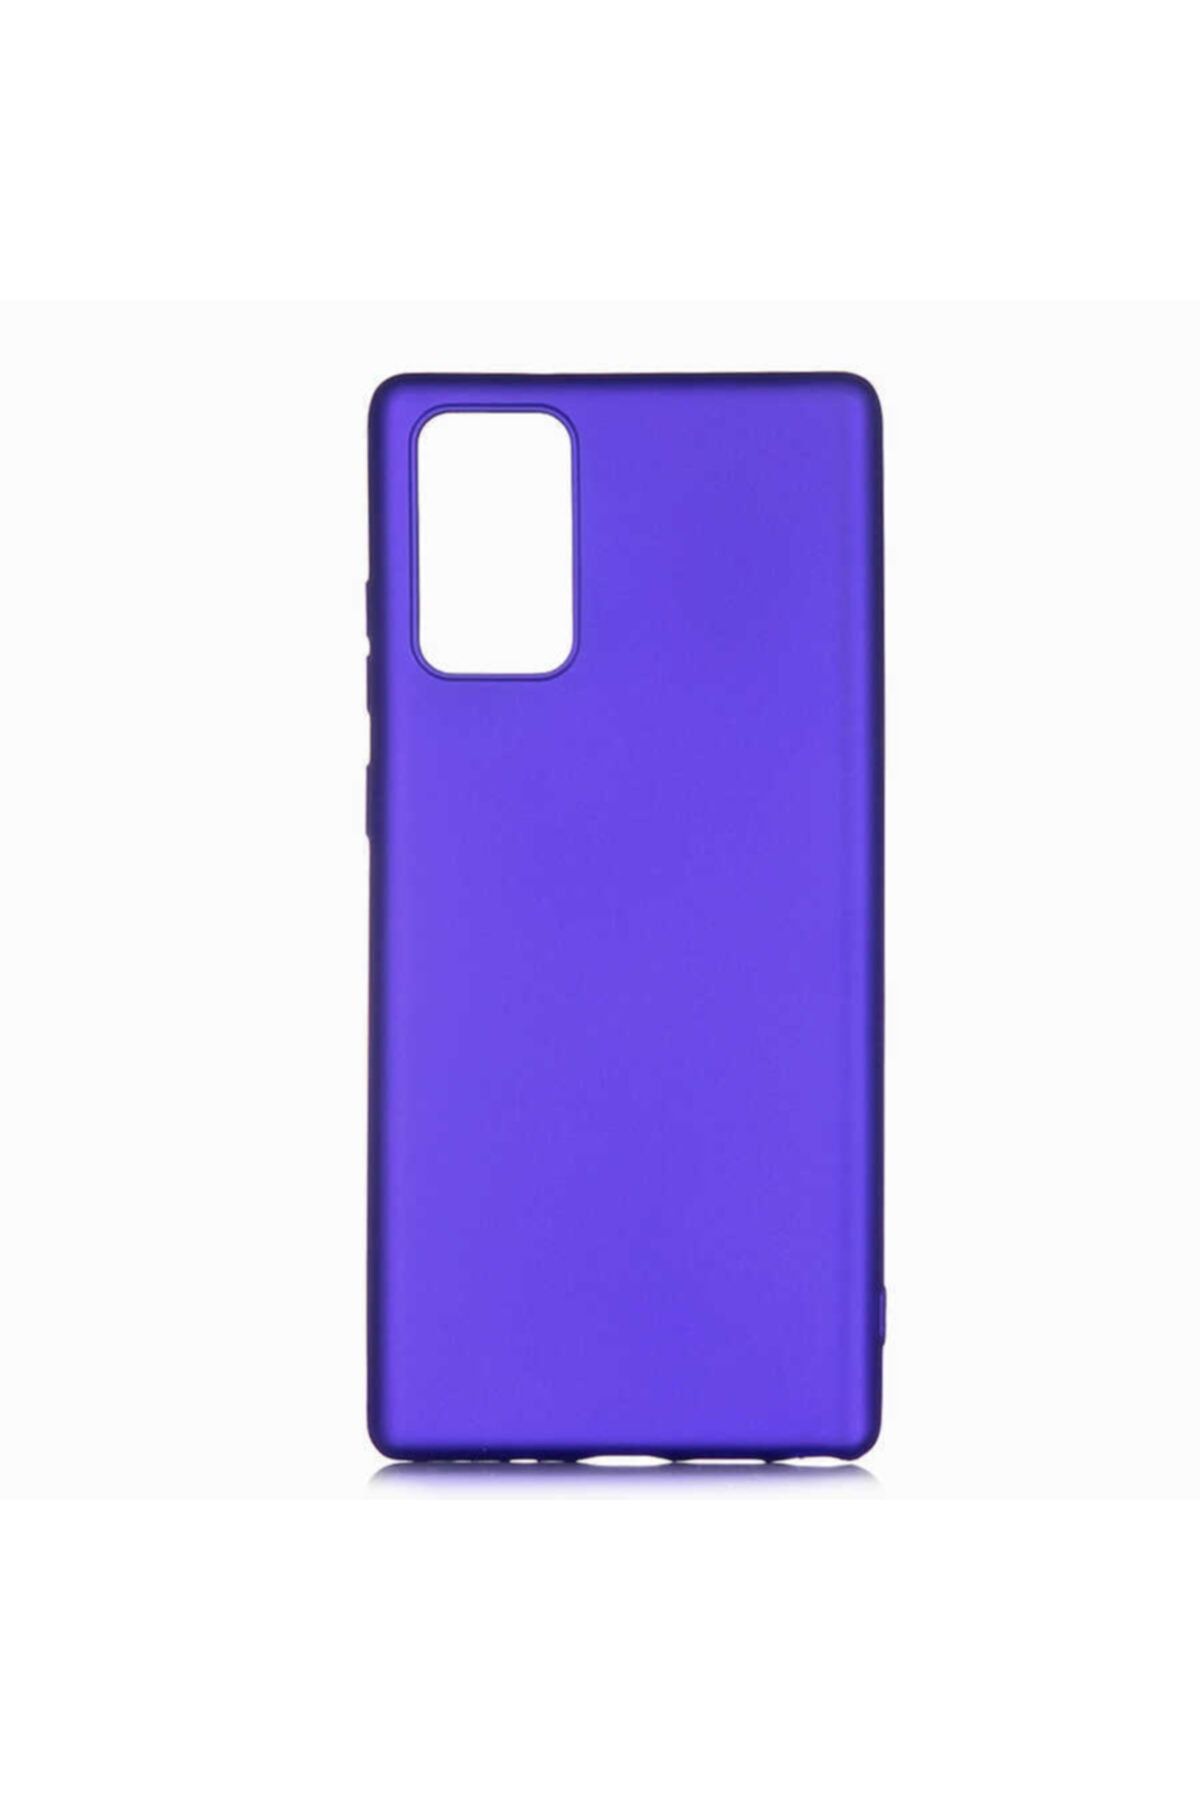 İncisoft Galaxy Note 20 Ultra Uyumlu Ince Yumuşak Soft Tasarım Renkli Silikon Kılıf